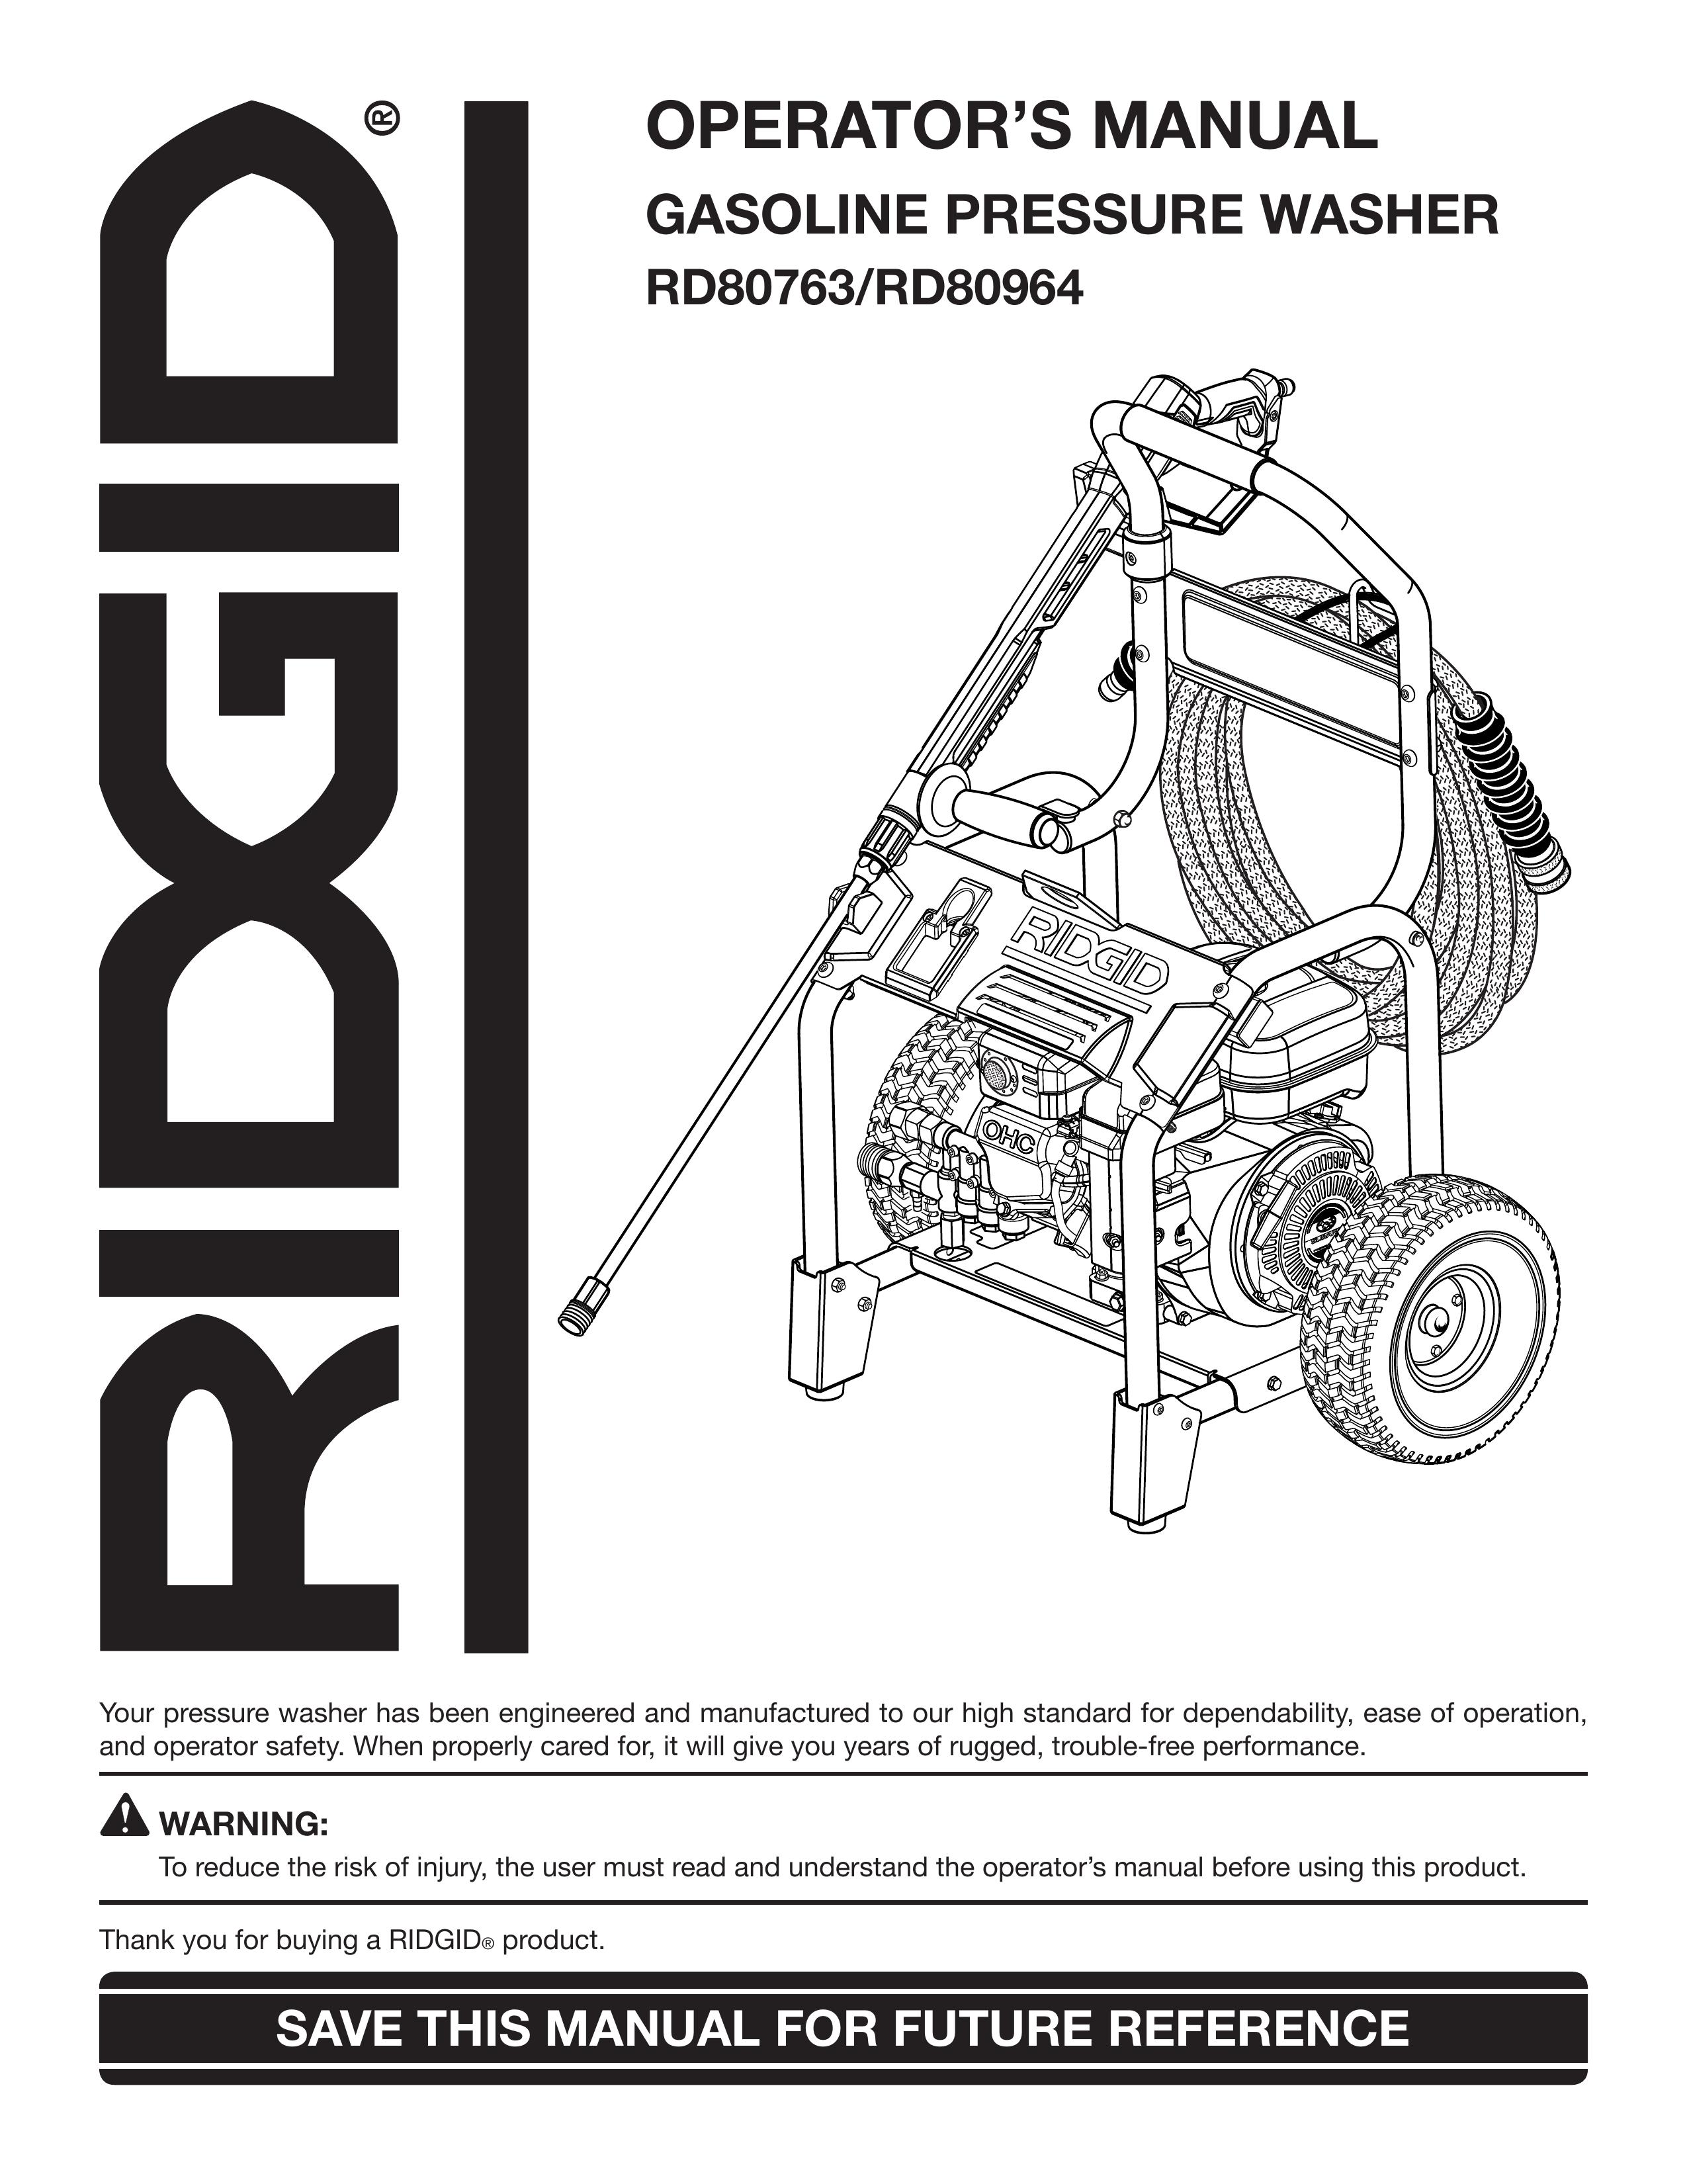 RIDGID RD80763 Pressure Washer User Manual